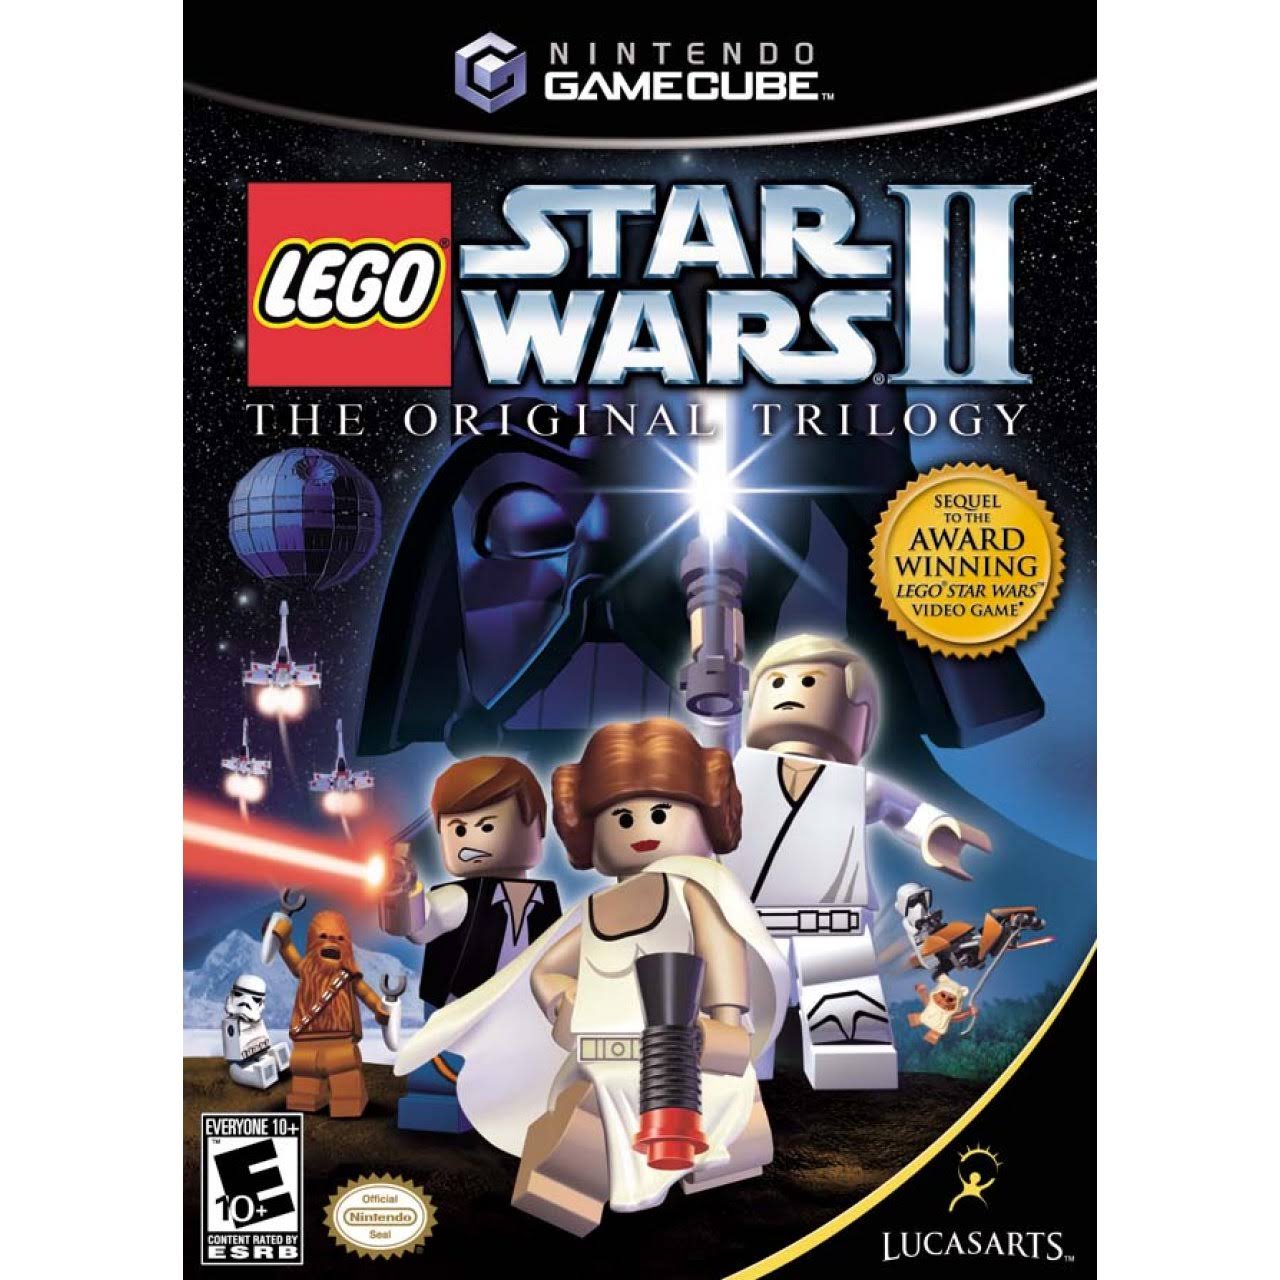 Lego Star Wars 2 Original Trilogy - Nintendo Game Cube